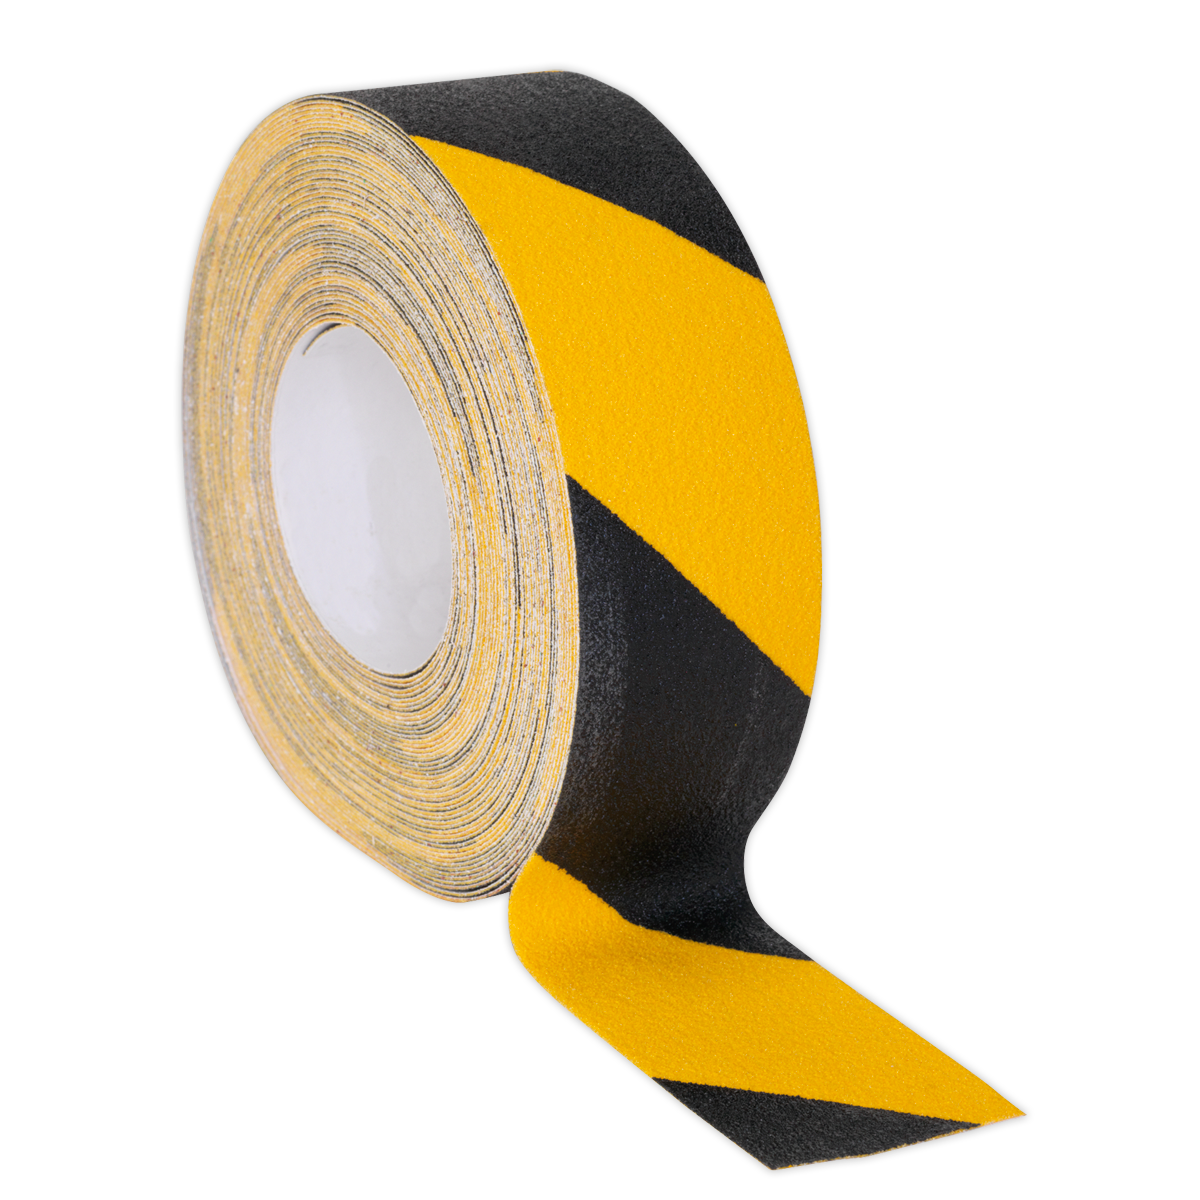 Anti-Slip Tape Self-Adhesive Black Yellow 50mm x 18m - ANTBY18 - Farming Parts